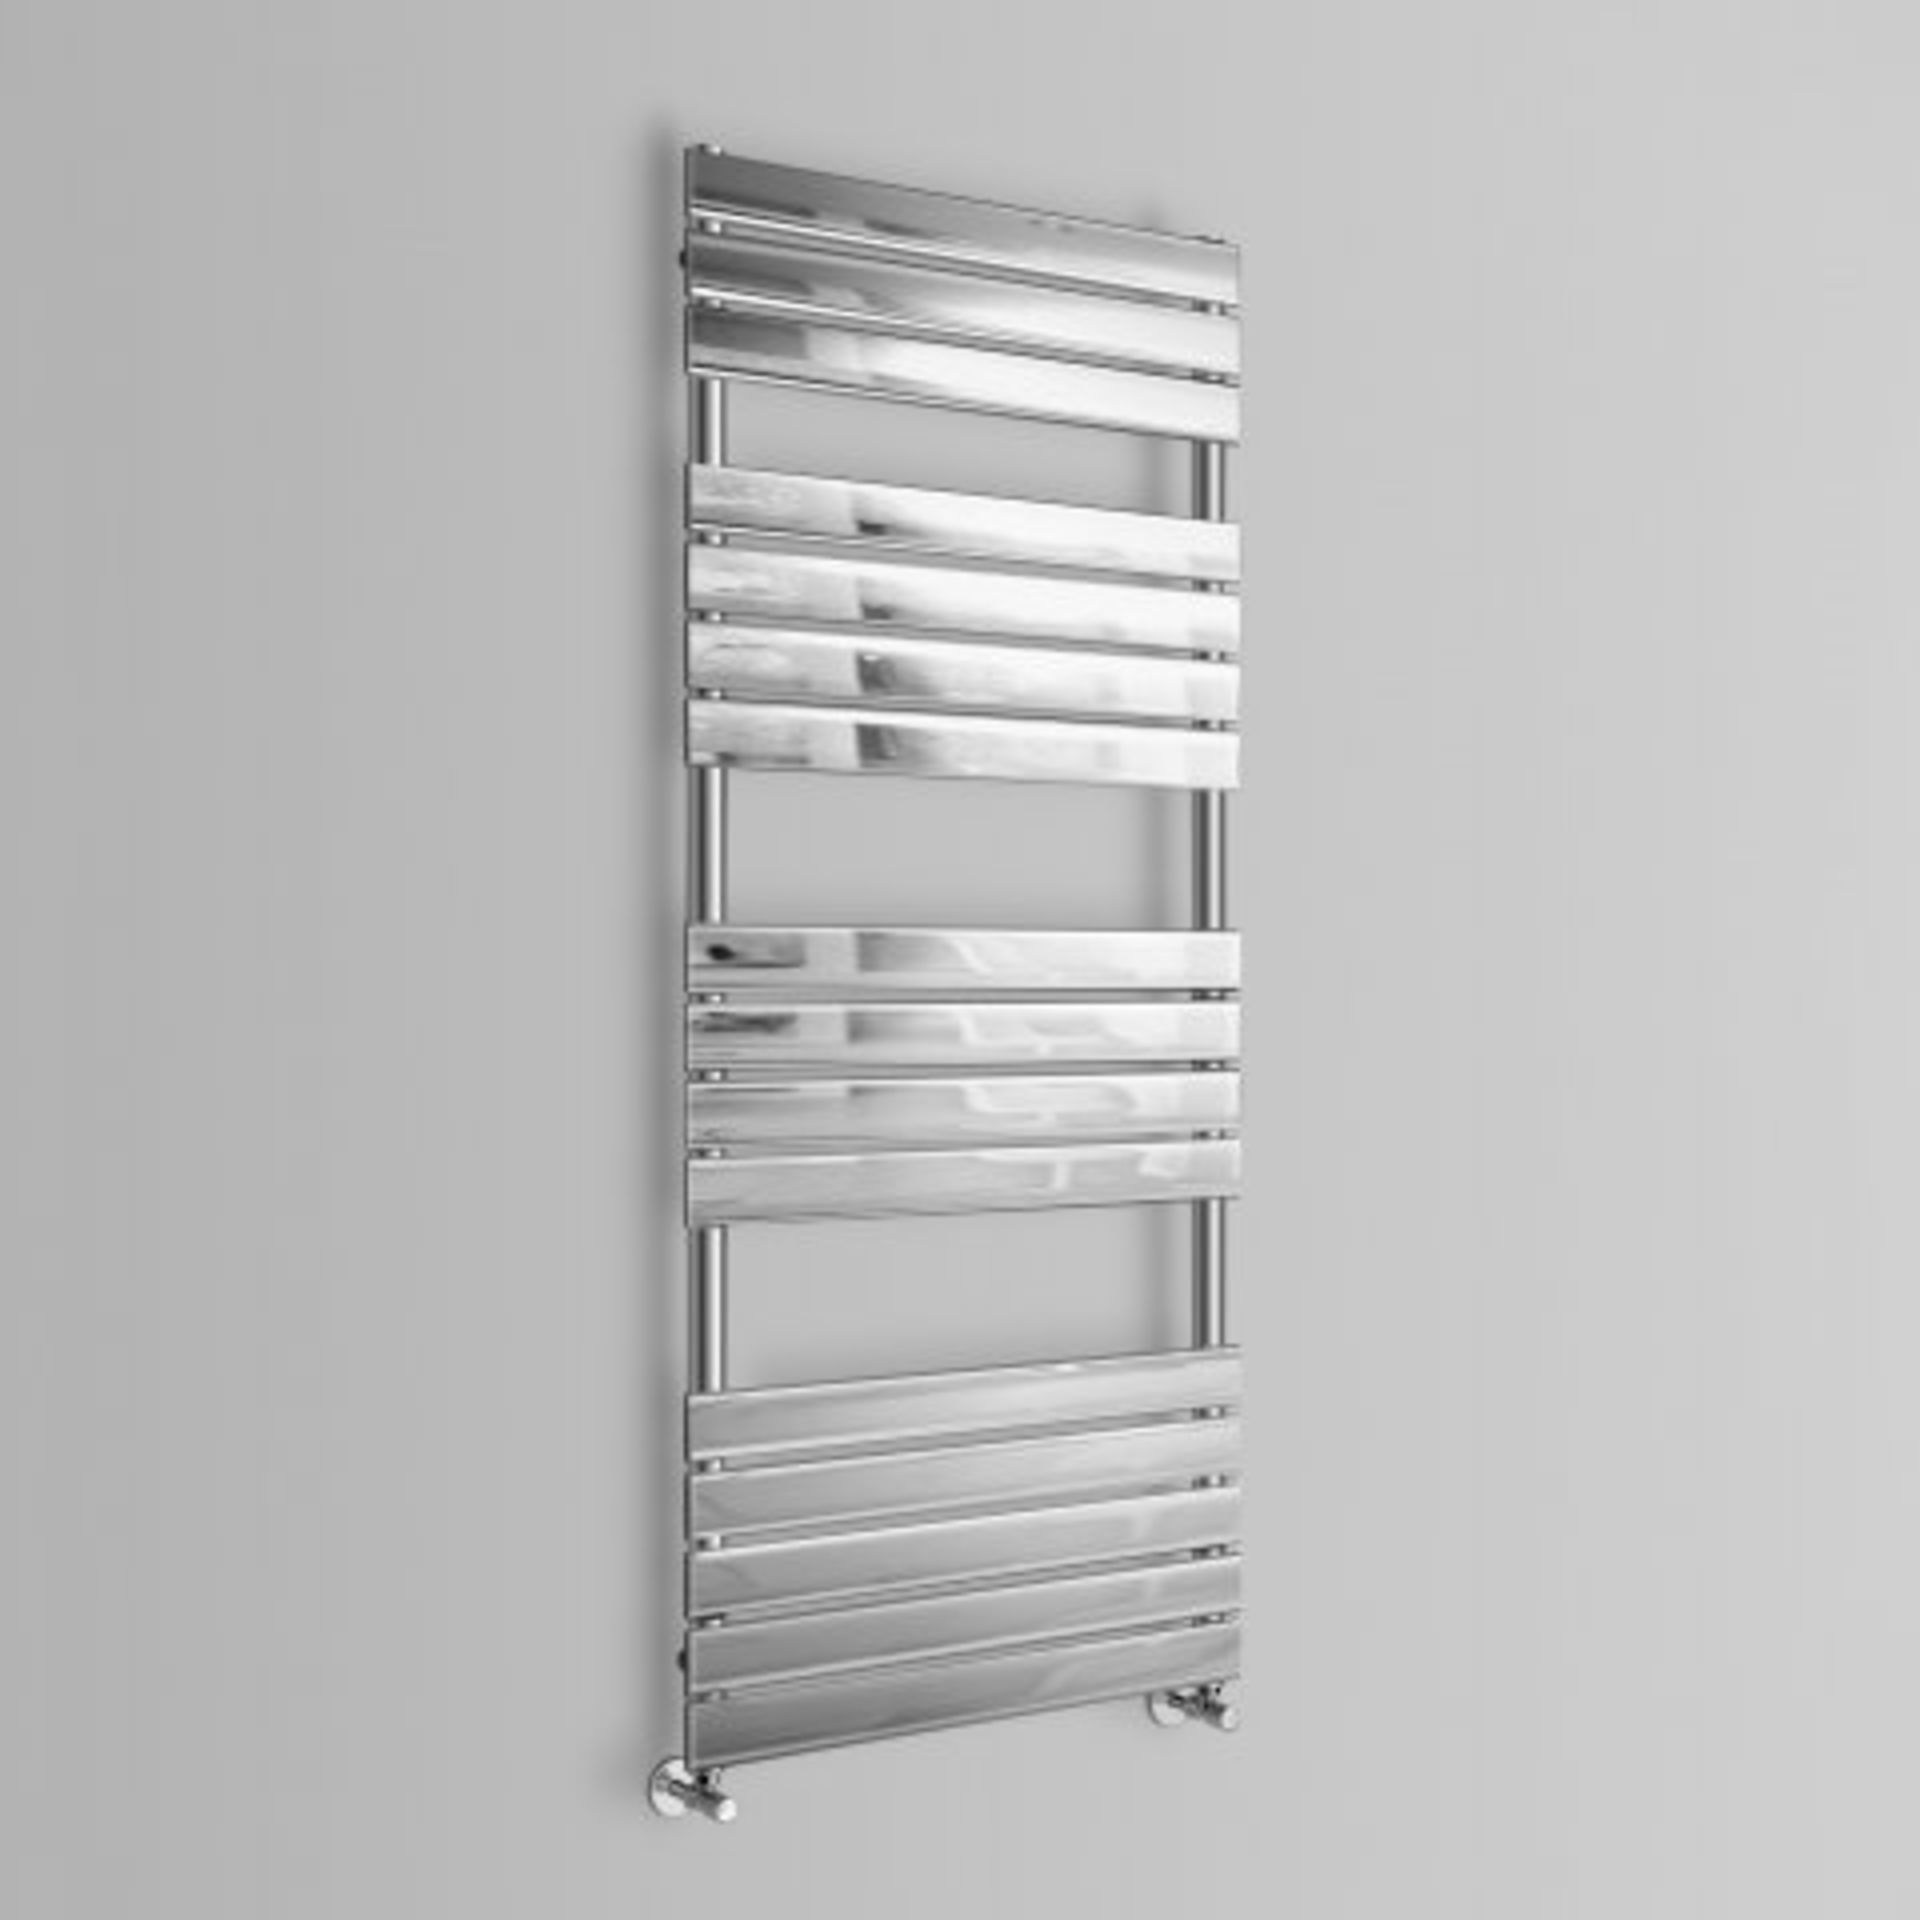 (AA197) 1600x600mm Chrome Flat Panel Ladder Towel Radiator. RRP £512.99. Stylishly sleek panels - Image 3 of 5